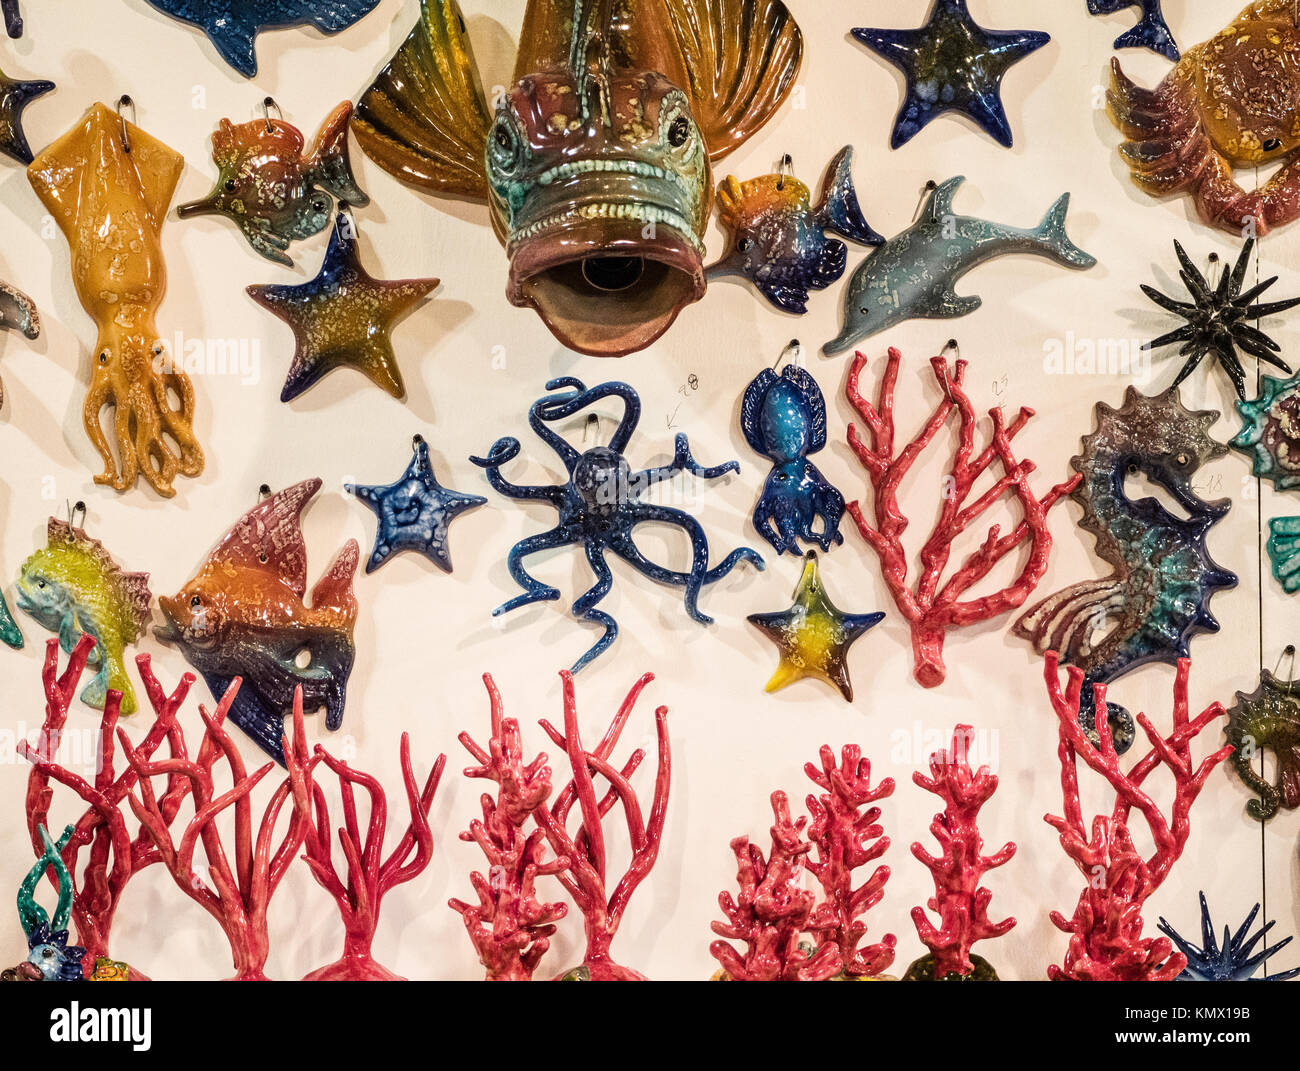 ceramic reproduction of marine animals Stock Photo